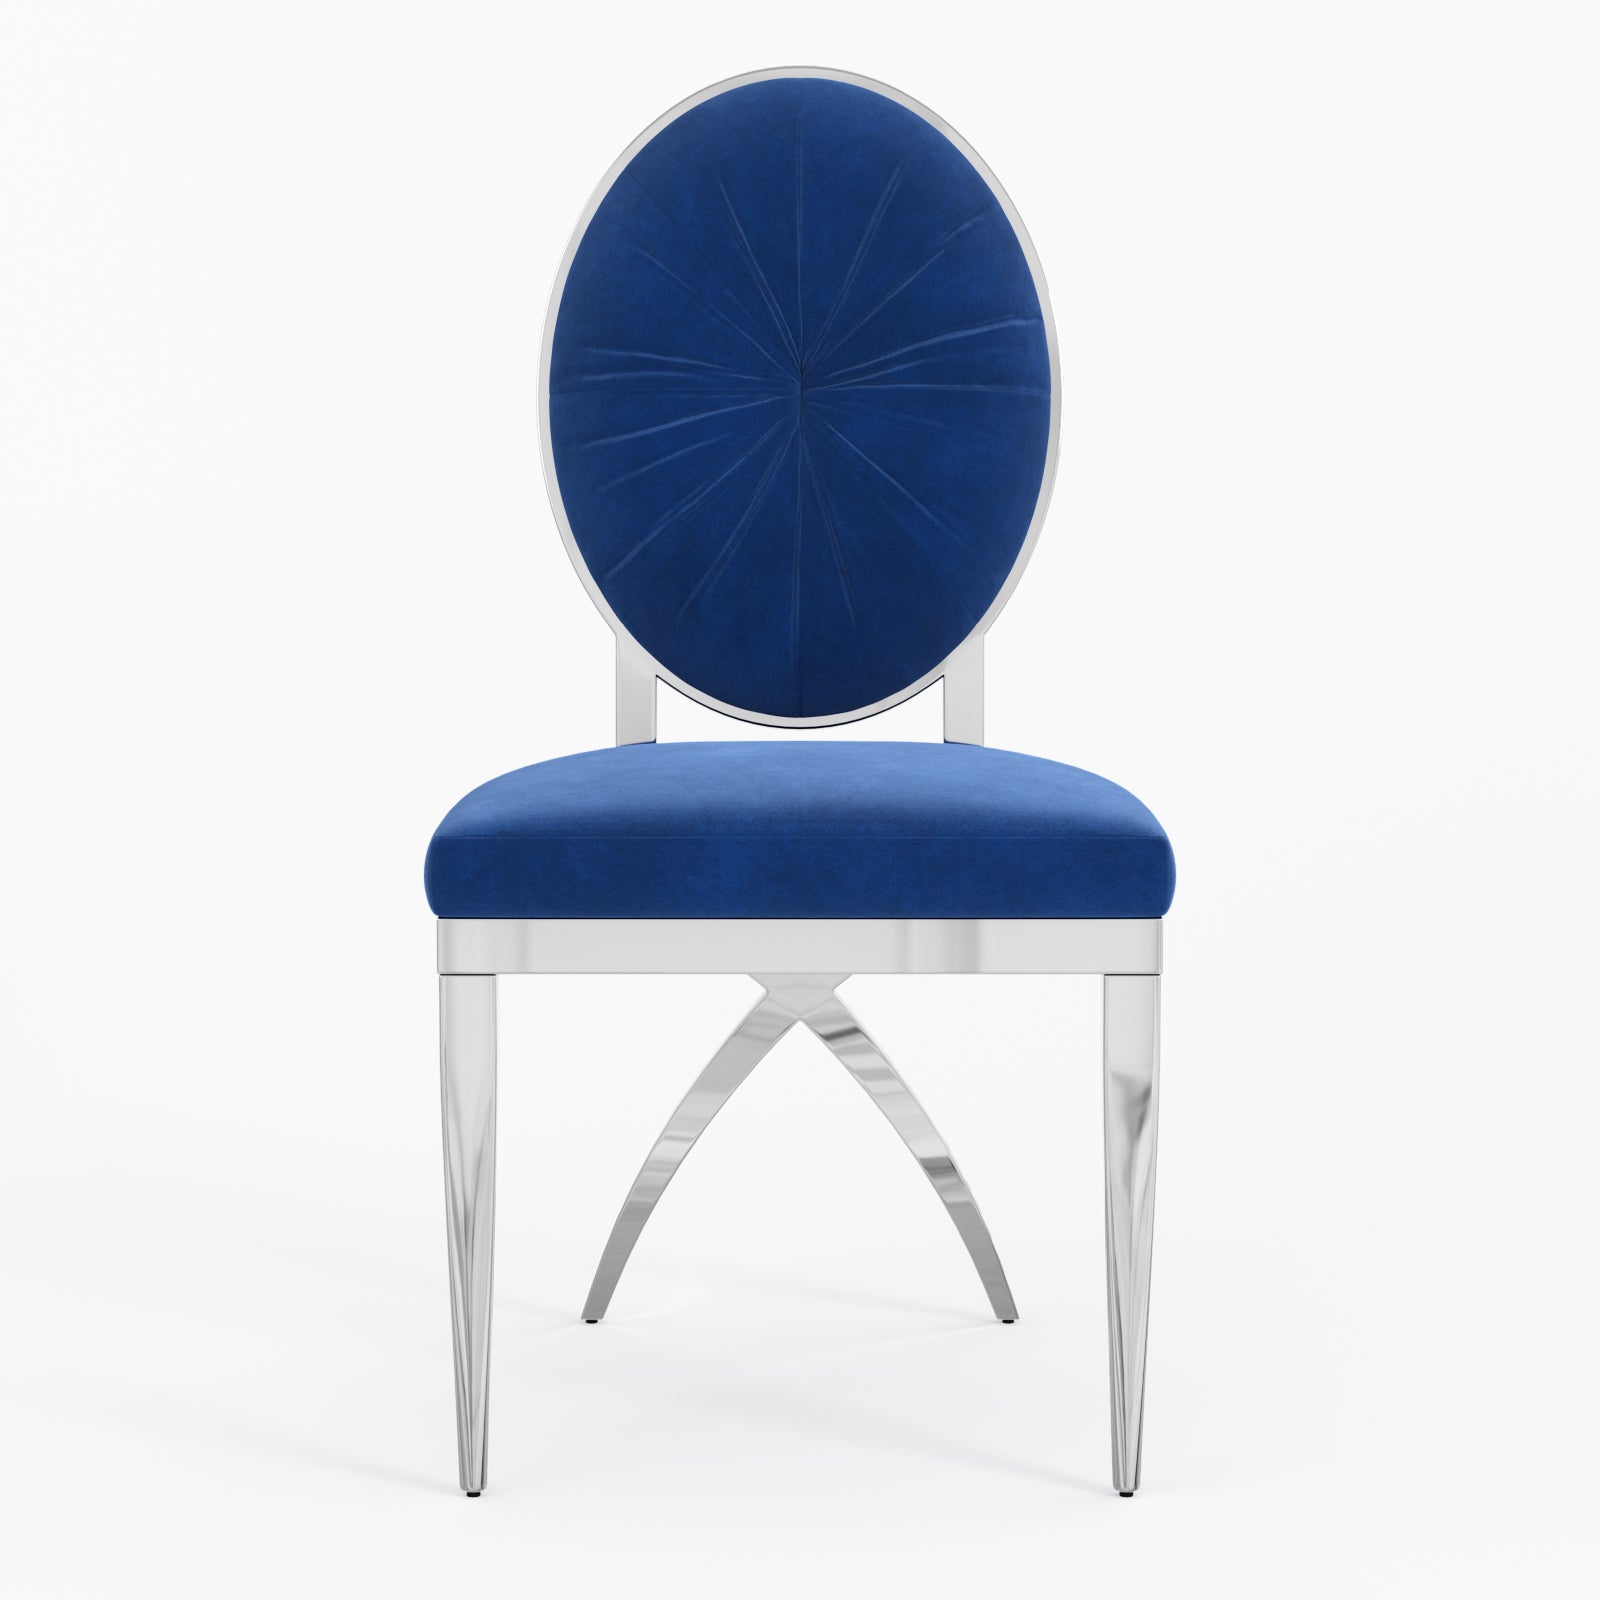 King Louis dining chairs | Blue Velvet | Metal legs | C117